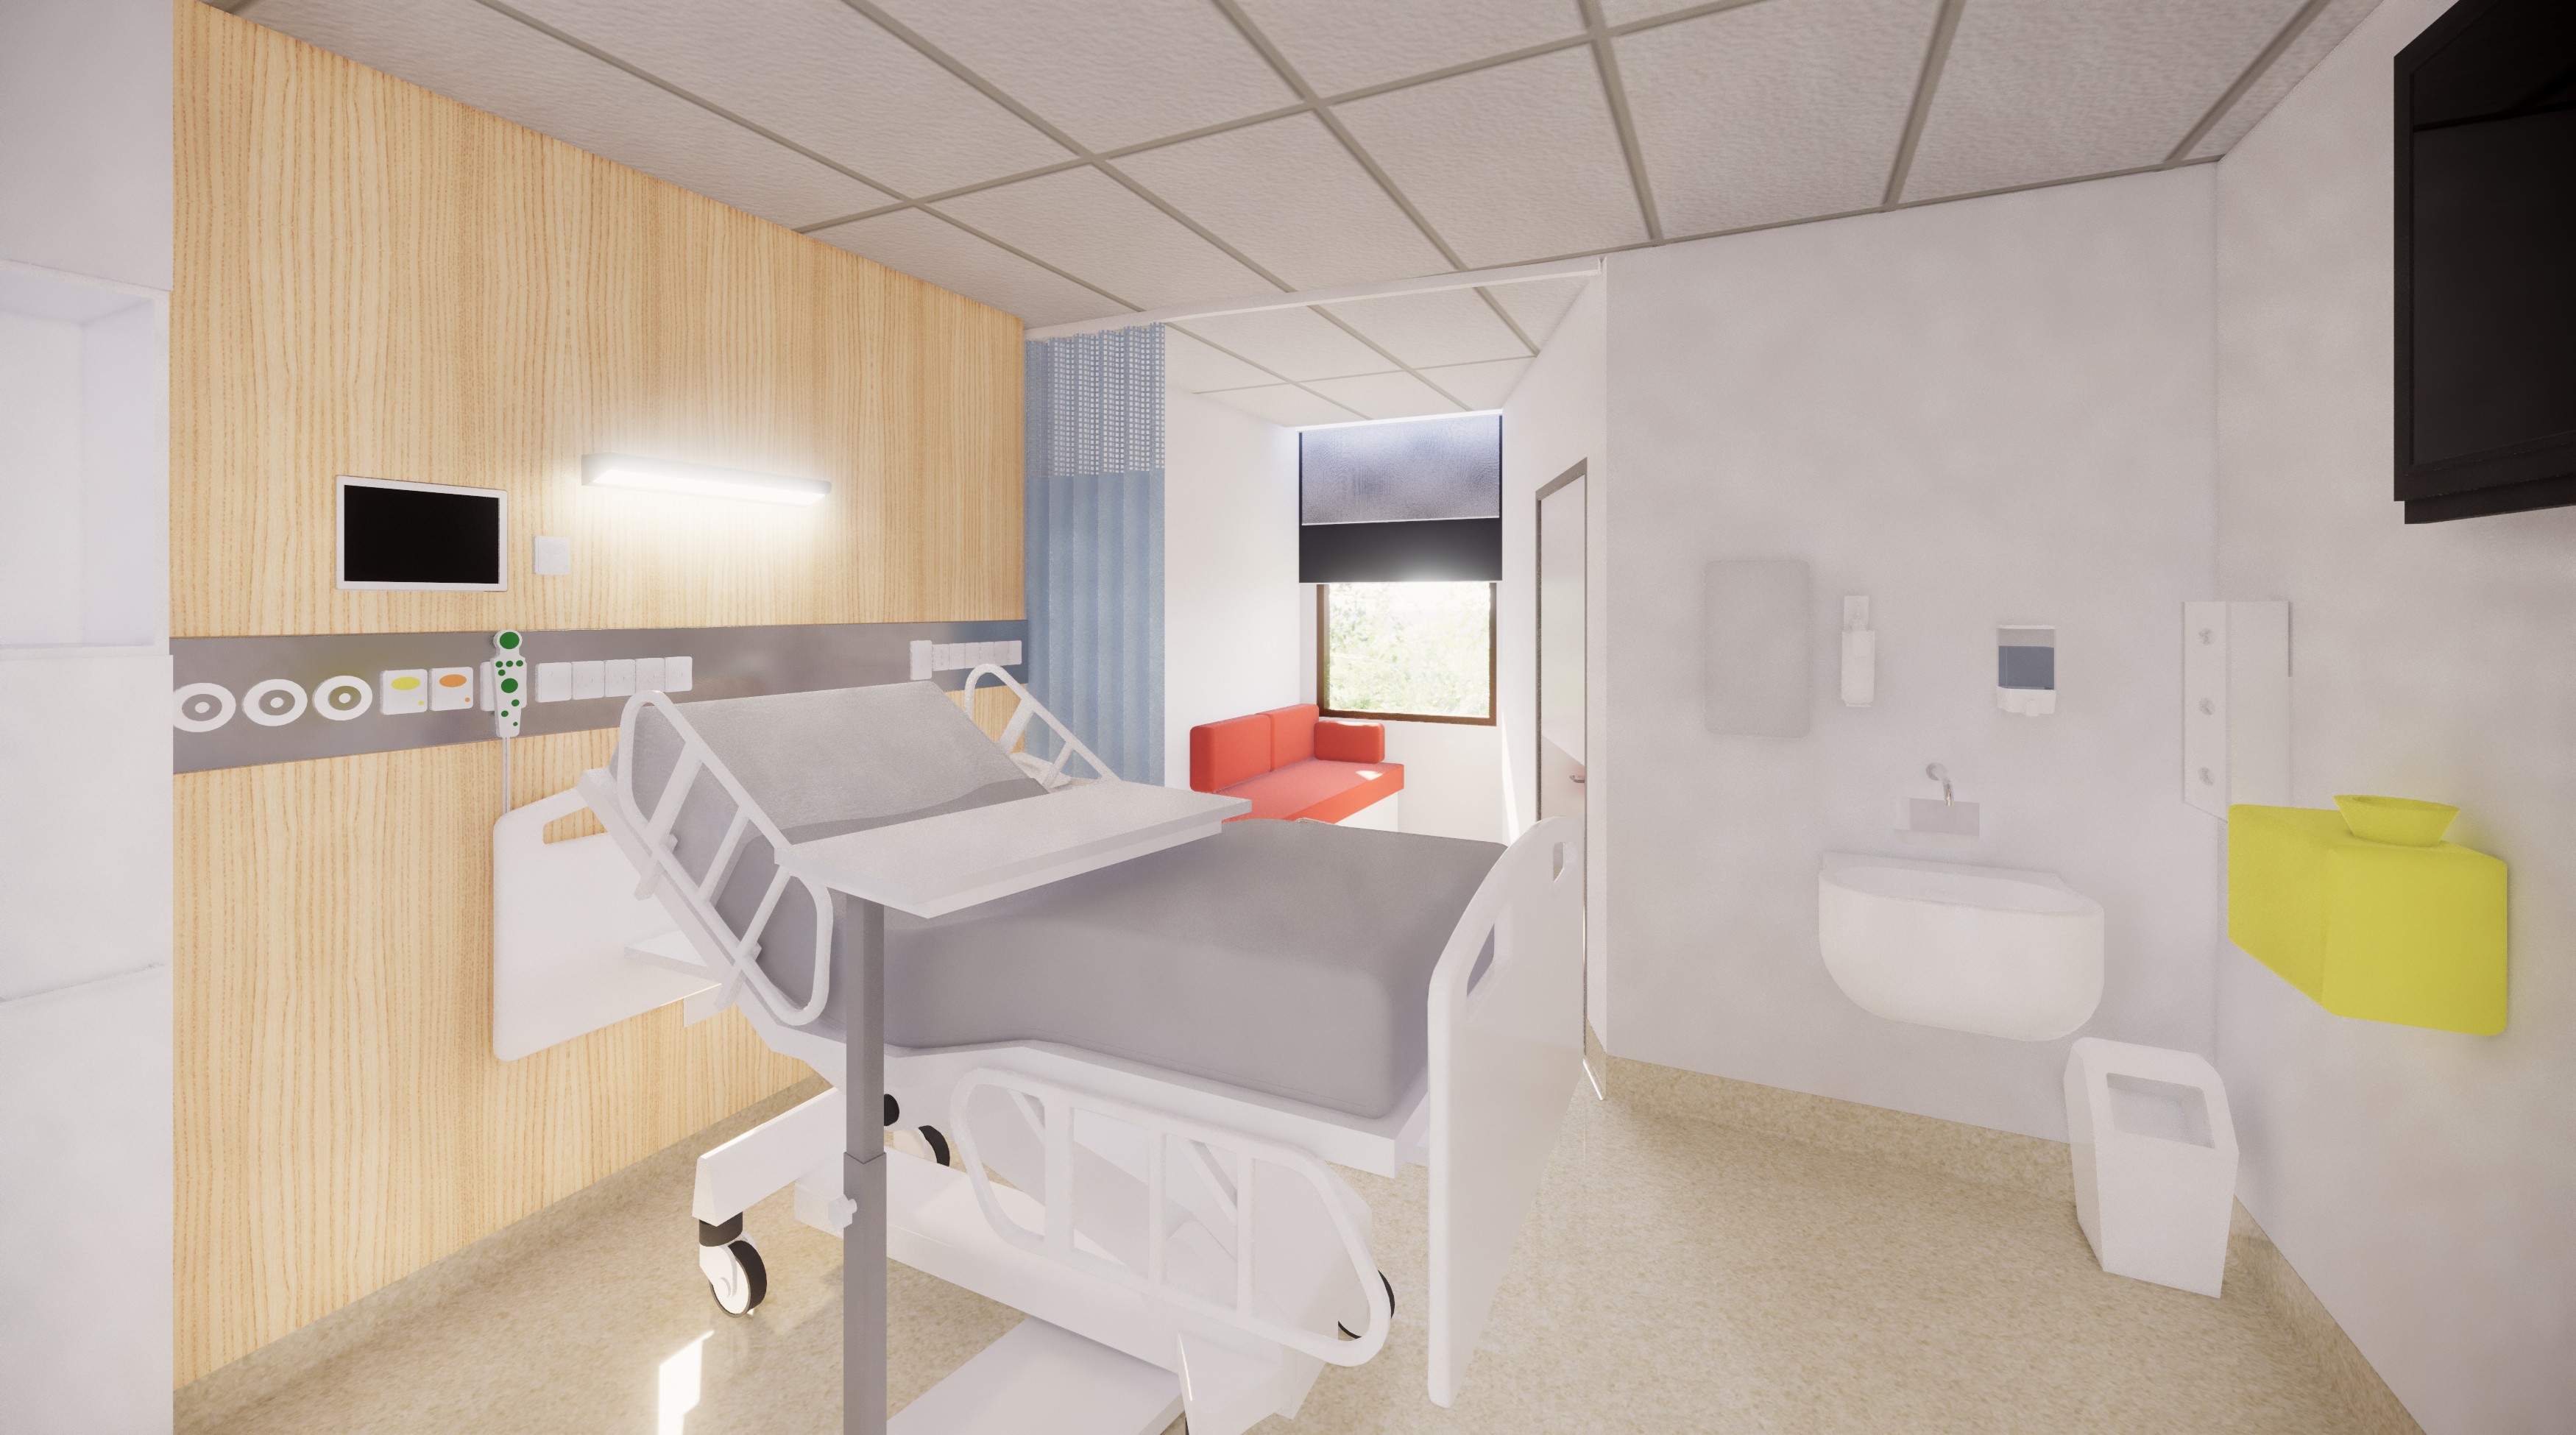 Canberra Hospital cancer ward redevelopment set to start